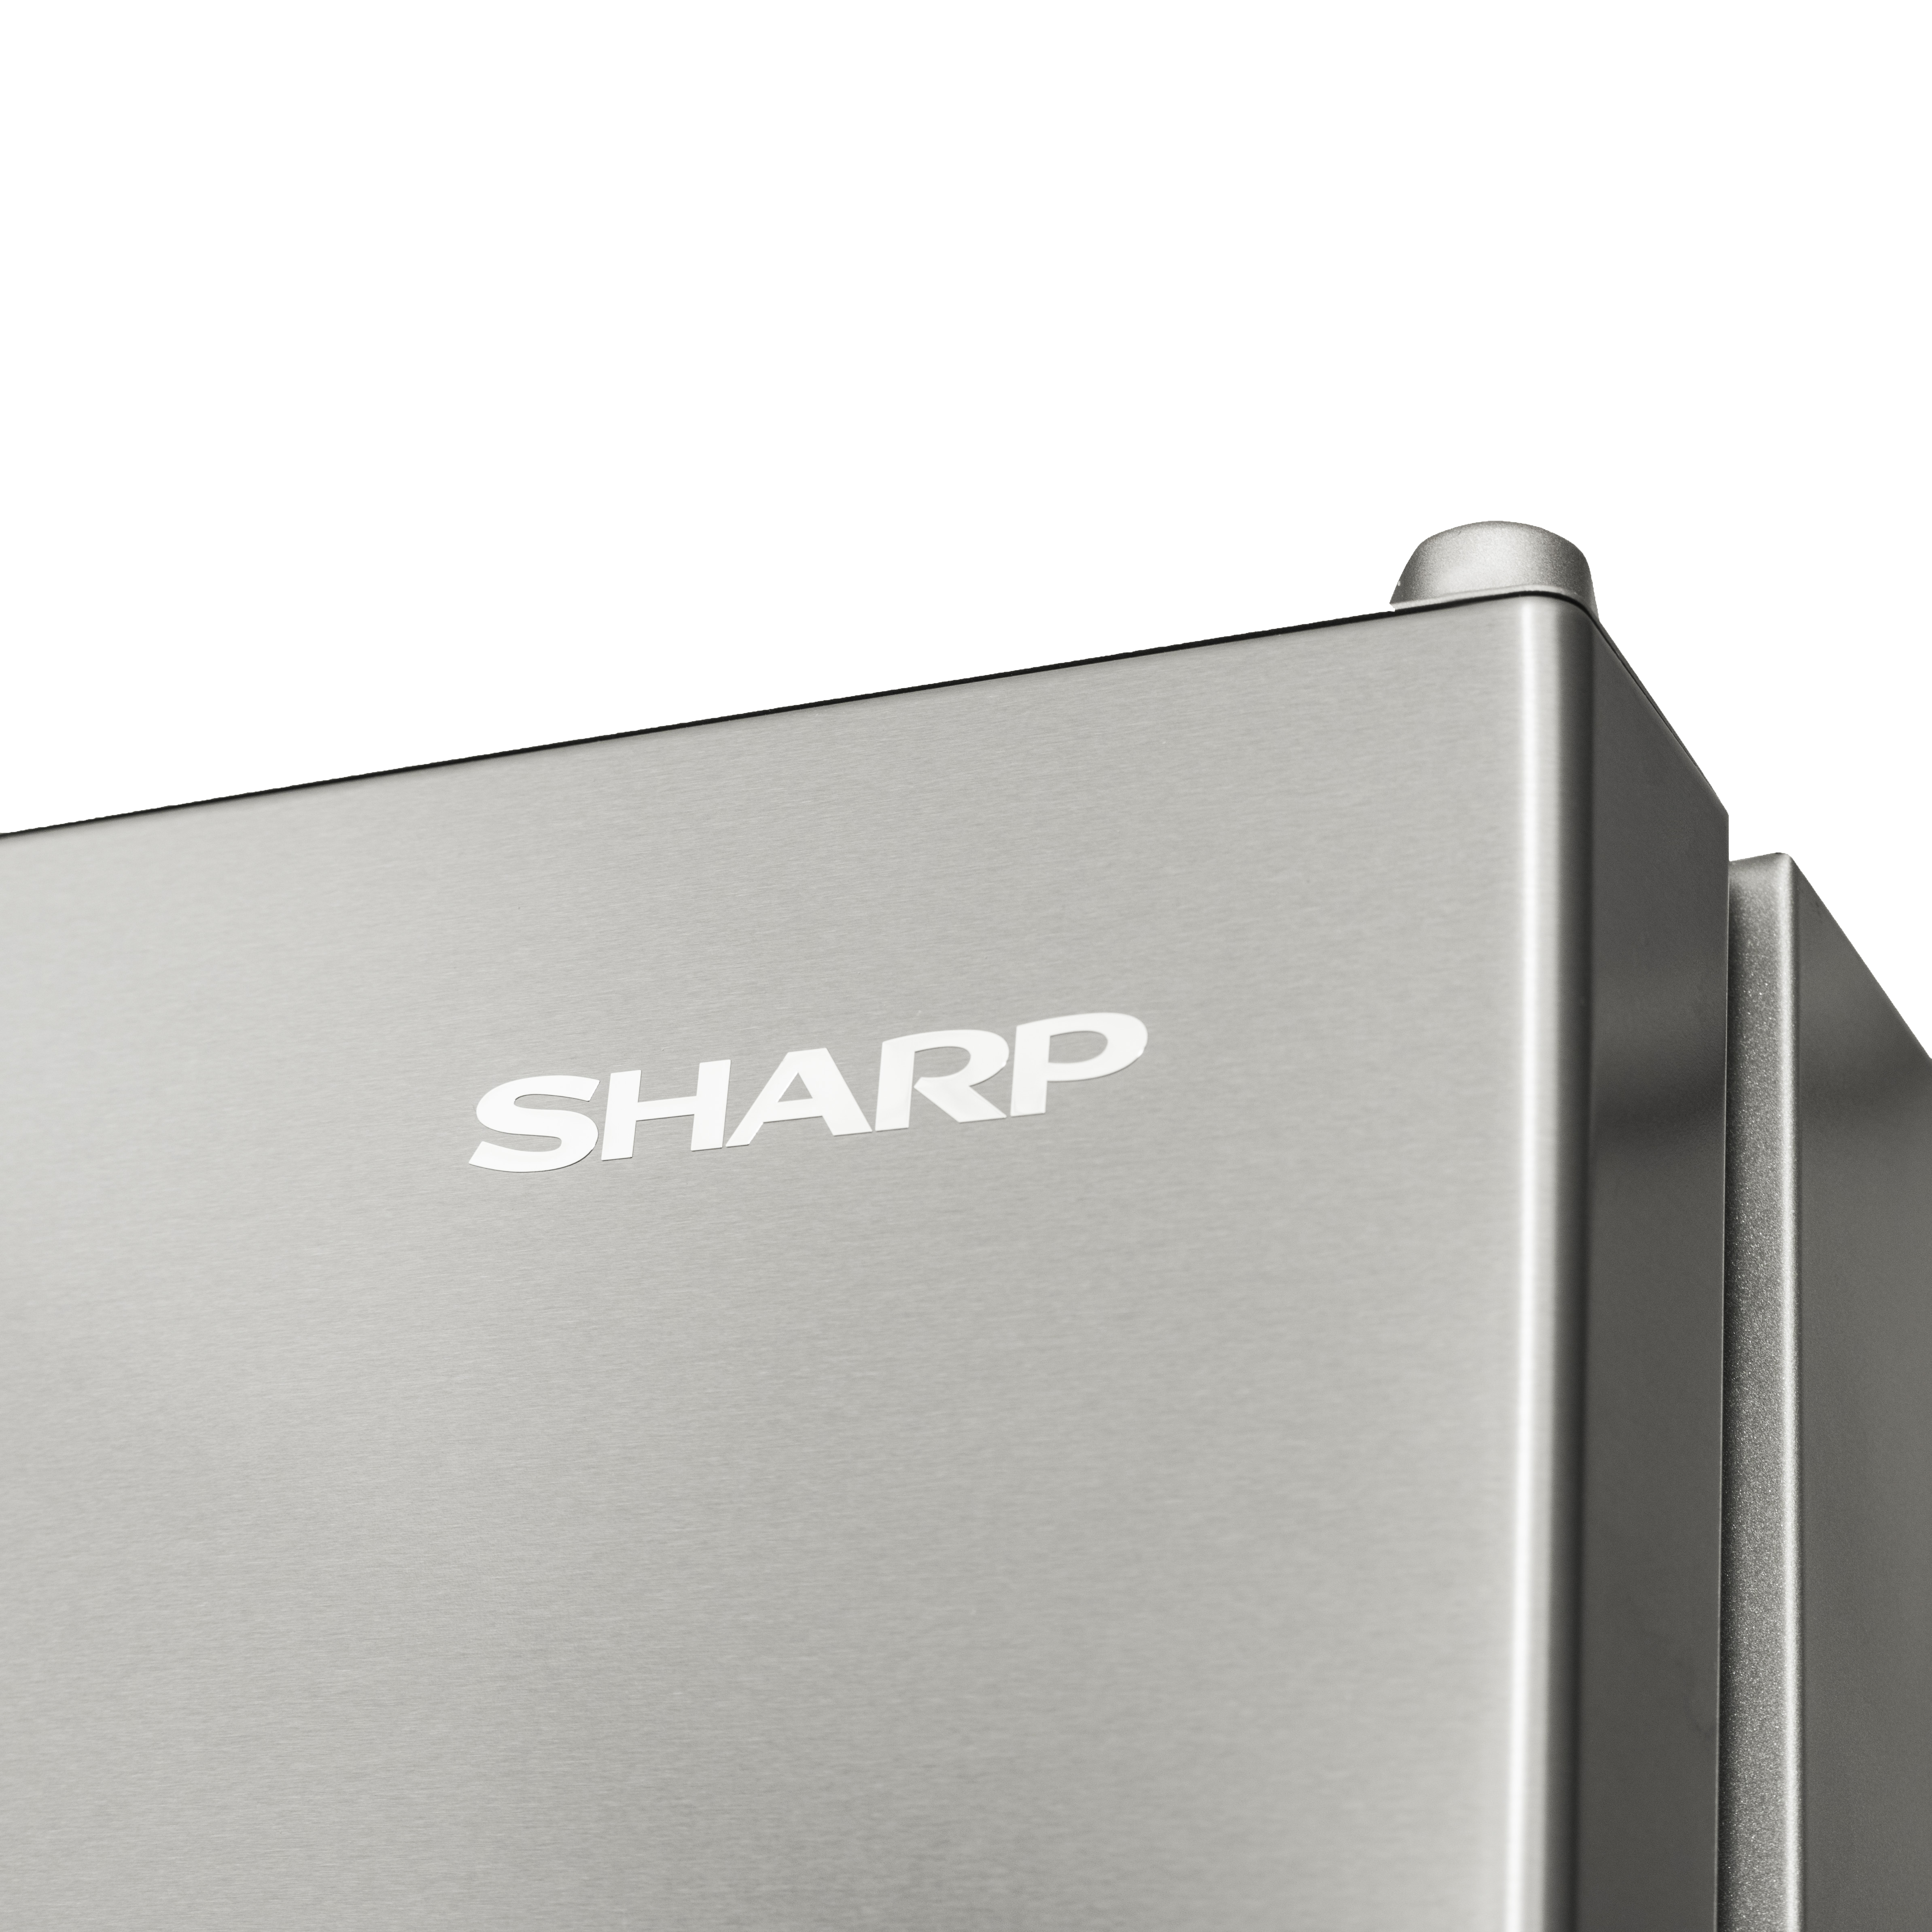 SHARP SJ-BA20IEXIE-EU Kühlgefrierkombination hoch, (E, 250 kWh, 2010 mm Inox)